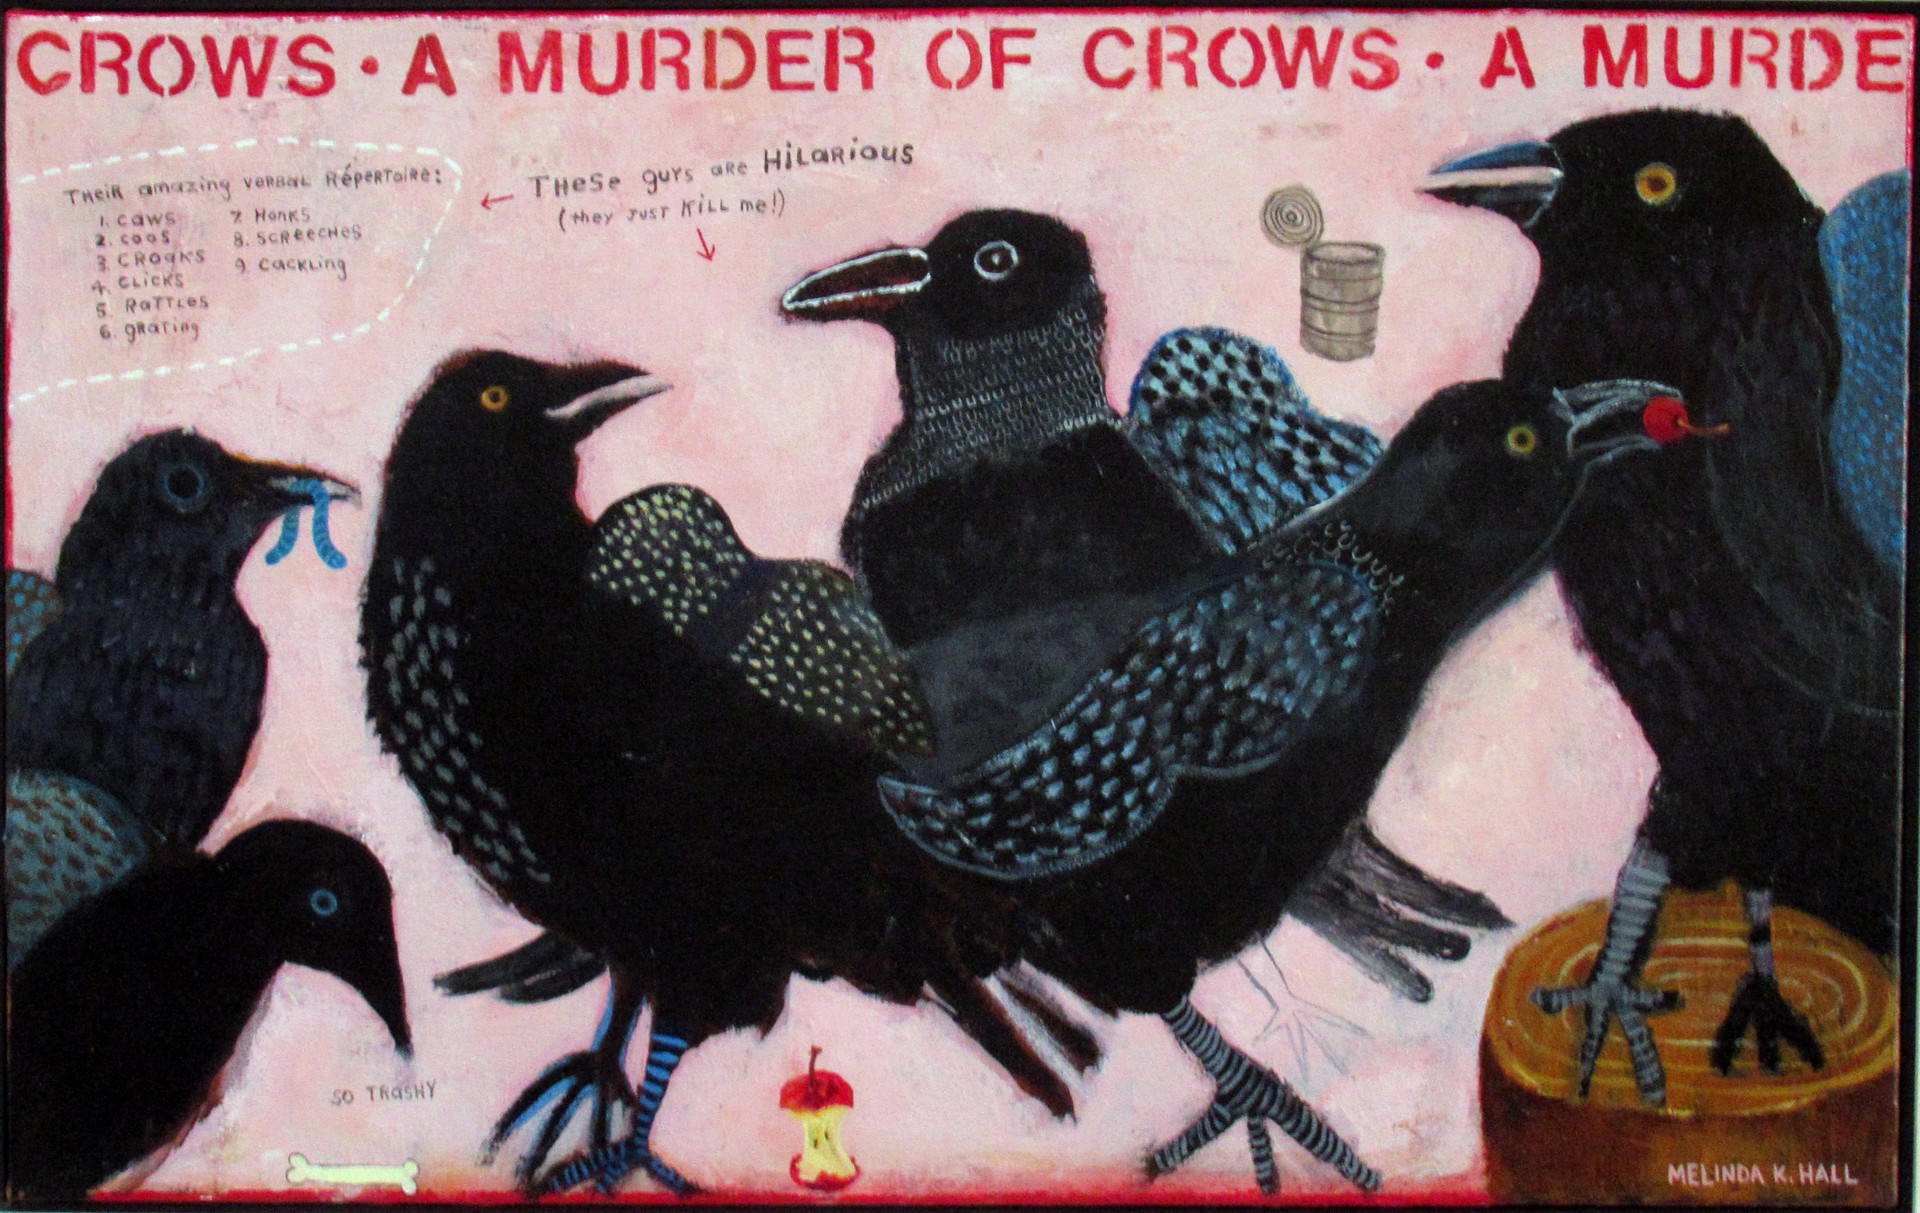 A Murder of Crows by Melinda K. Hall